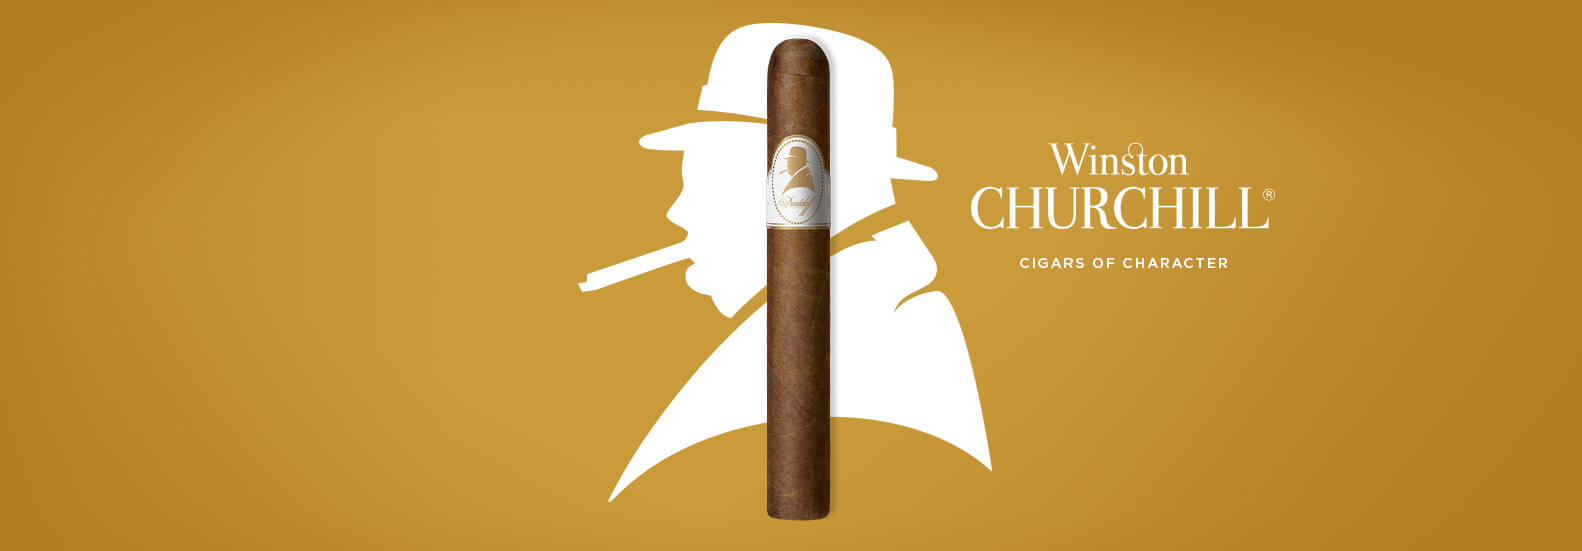 Winston Churchill Original Series Petit Panetela Zigarre mit Winston Churchill Logo im Hintergrund